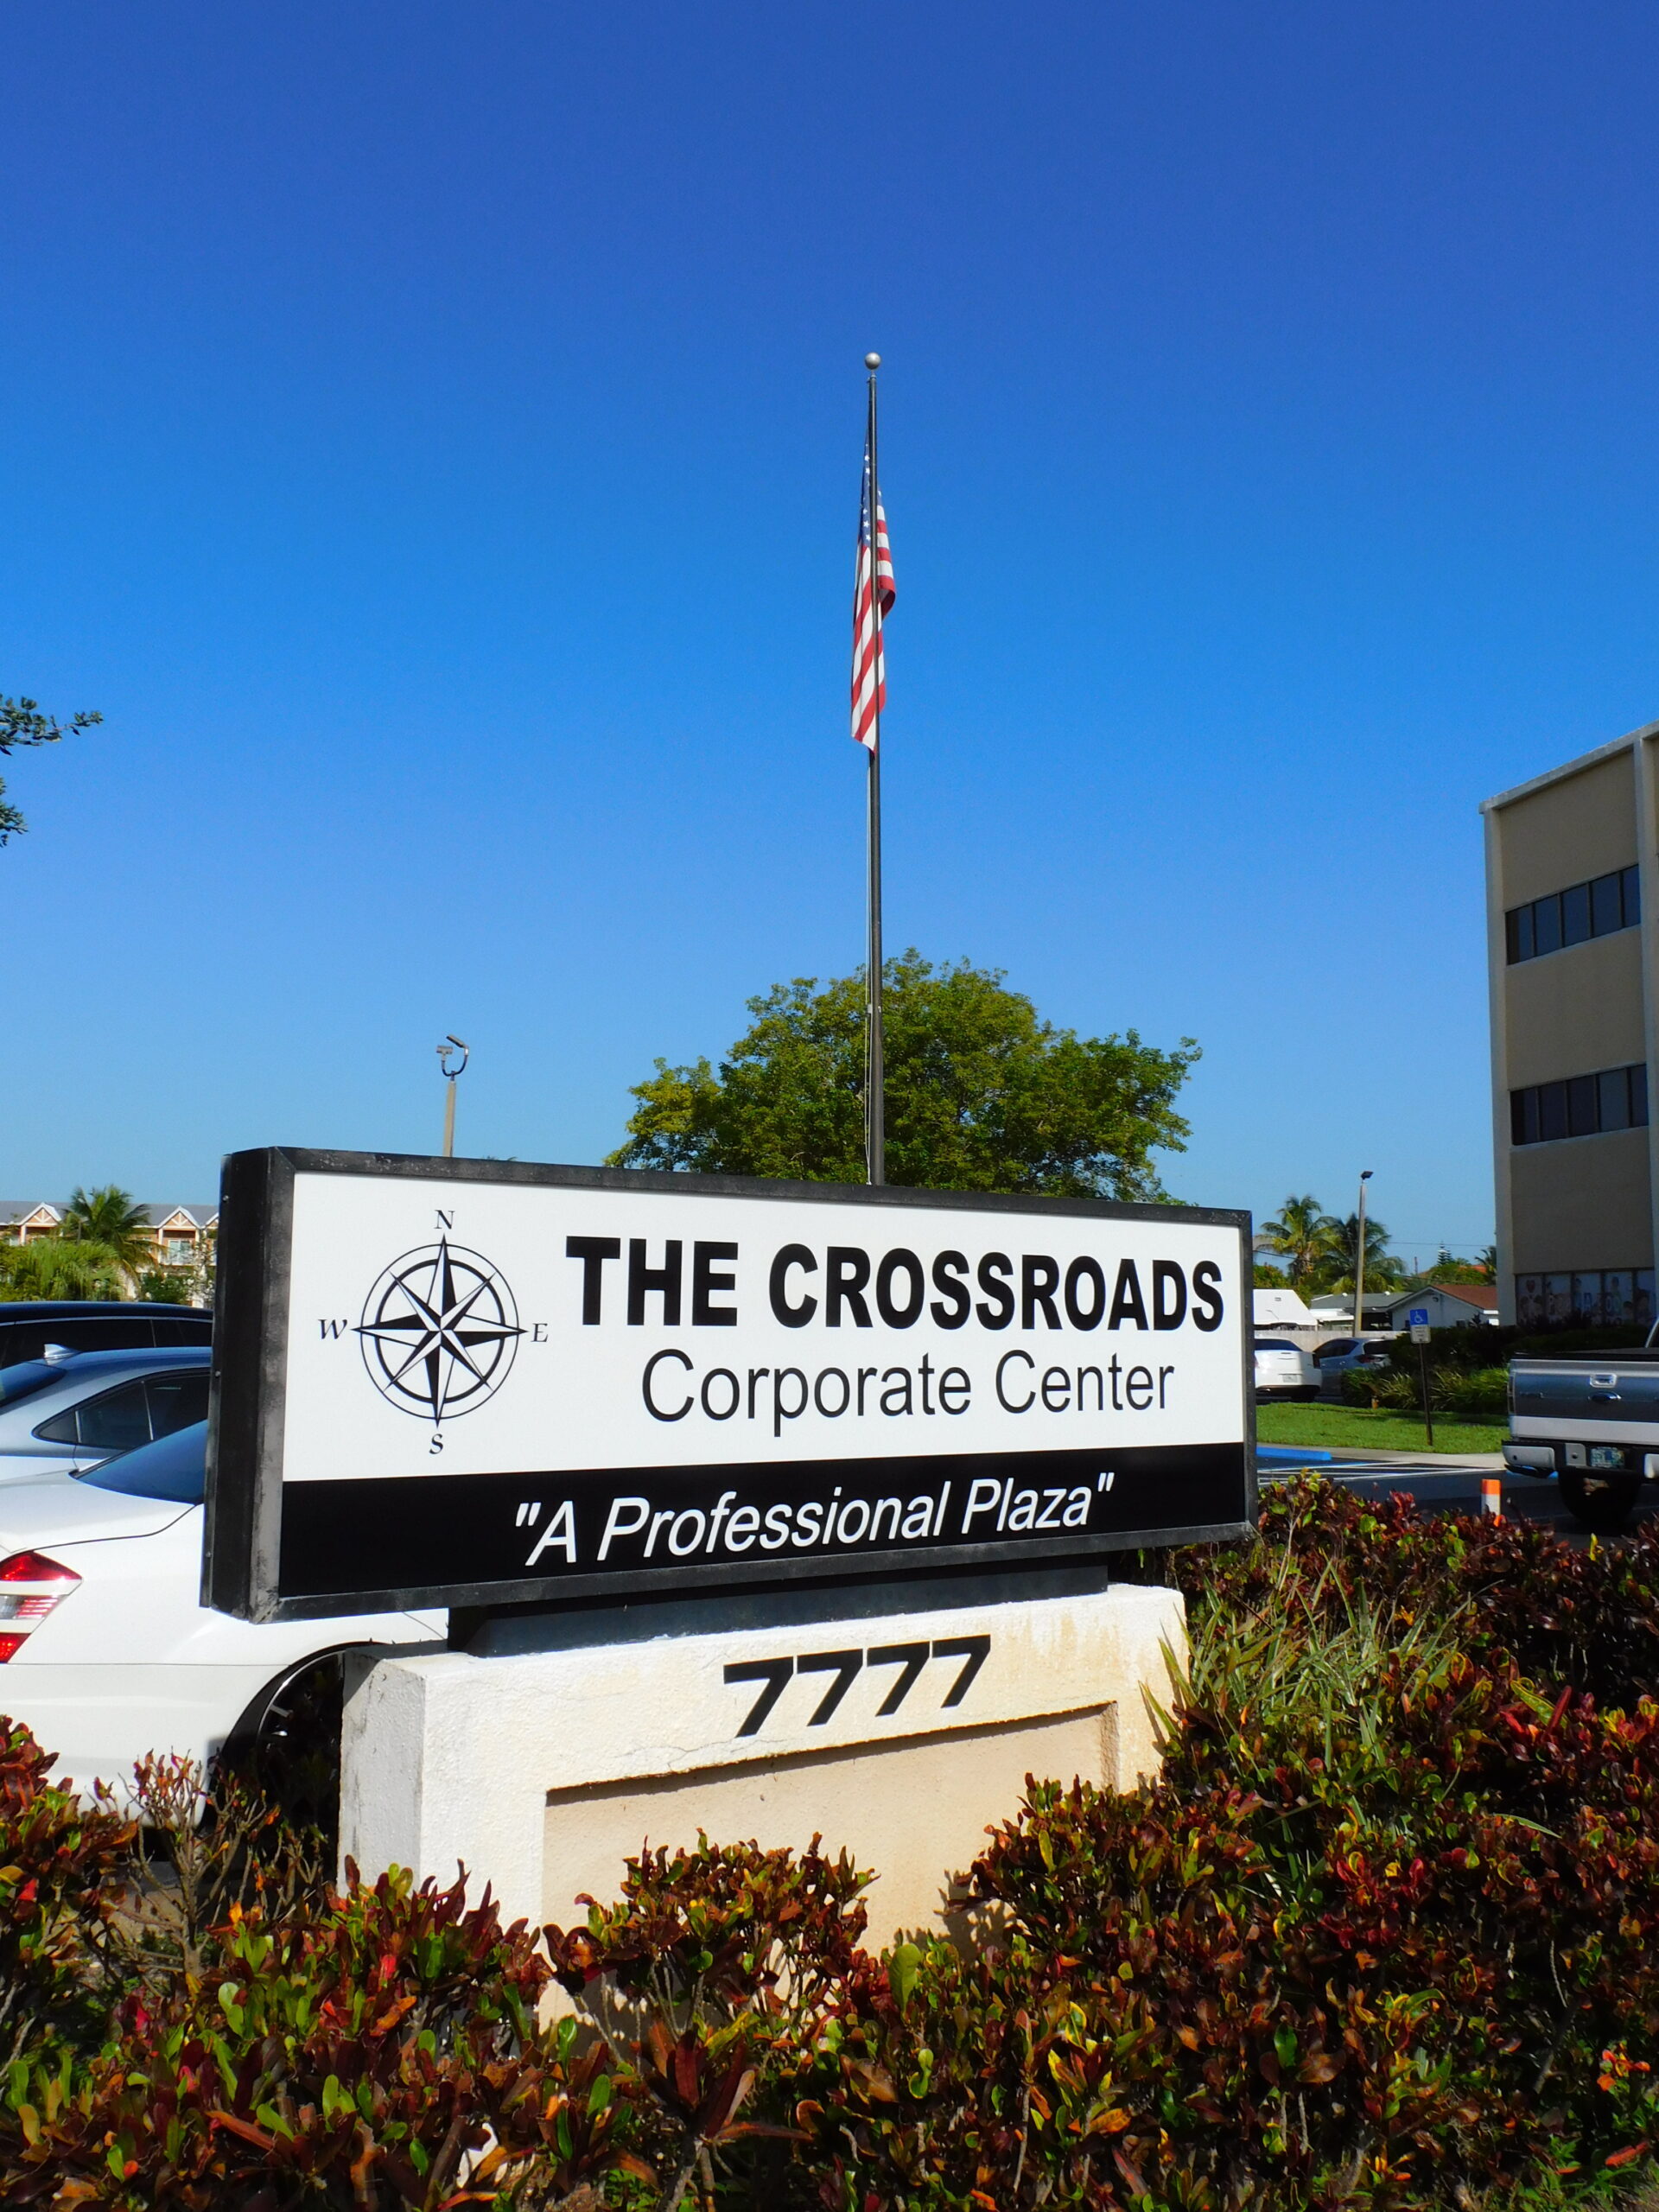 The Crossroads Corporate Center